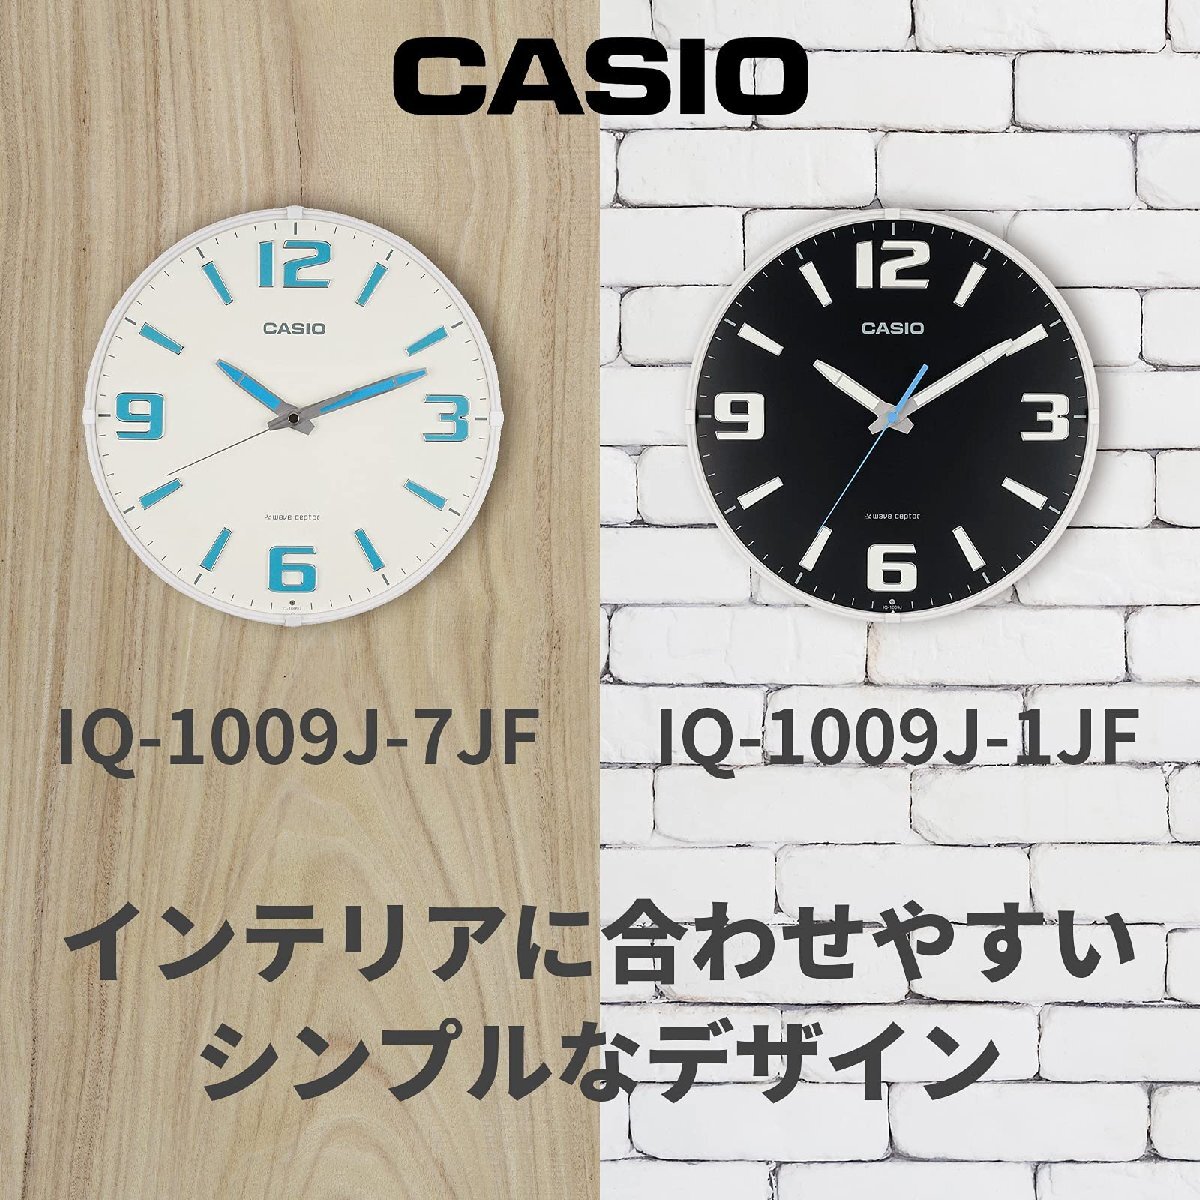 CASIO(カシオ) 掛け時計 電波時計 黒 アナログ 夜間秒針停止 機能付き IQ-1009J-1JF_画像7